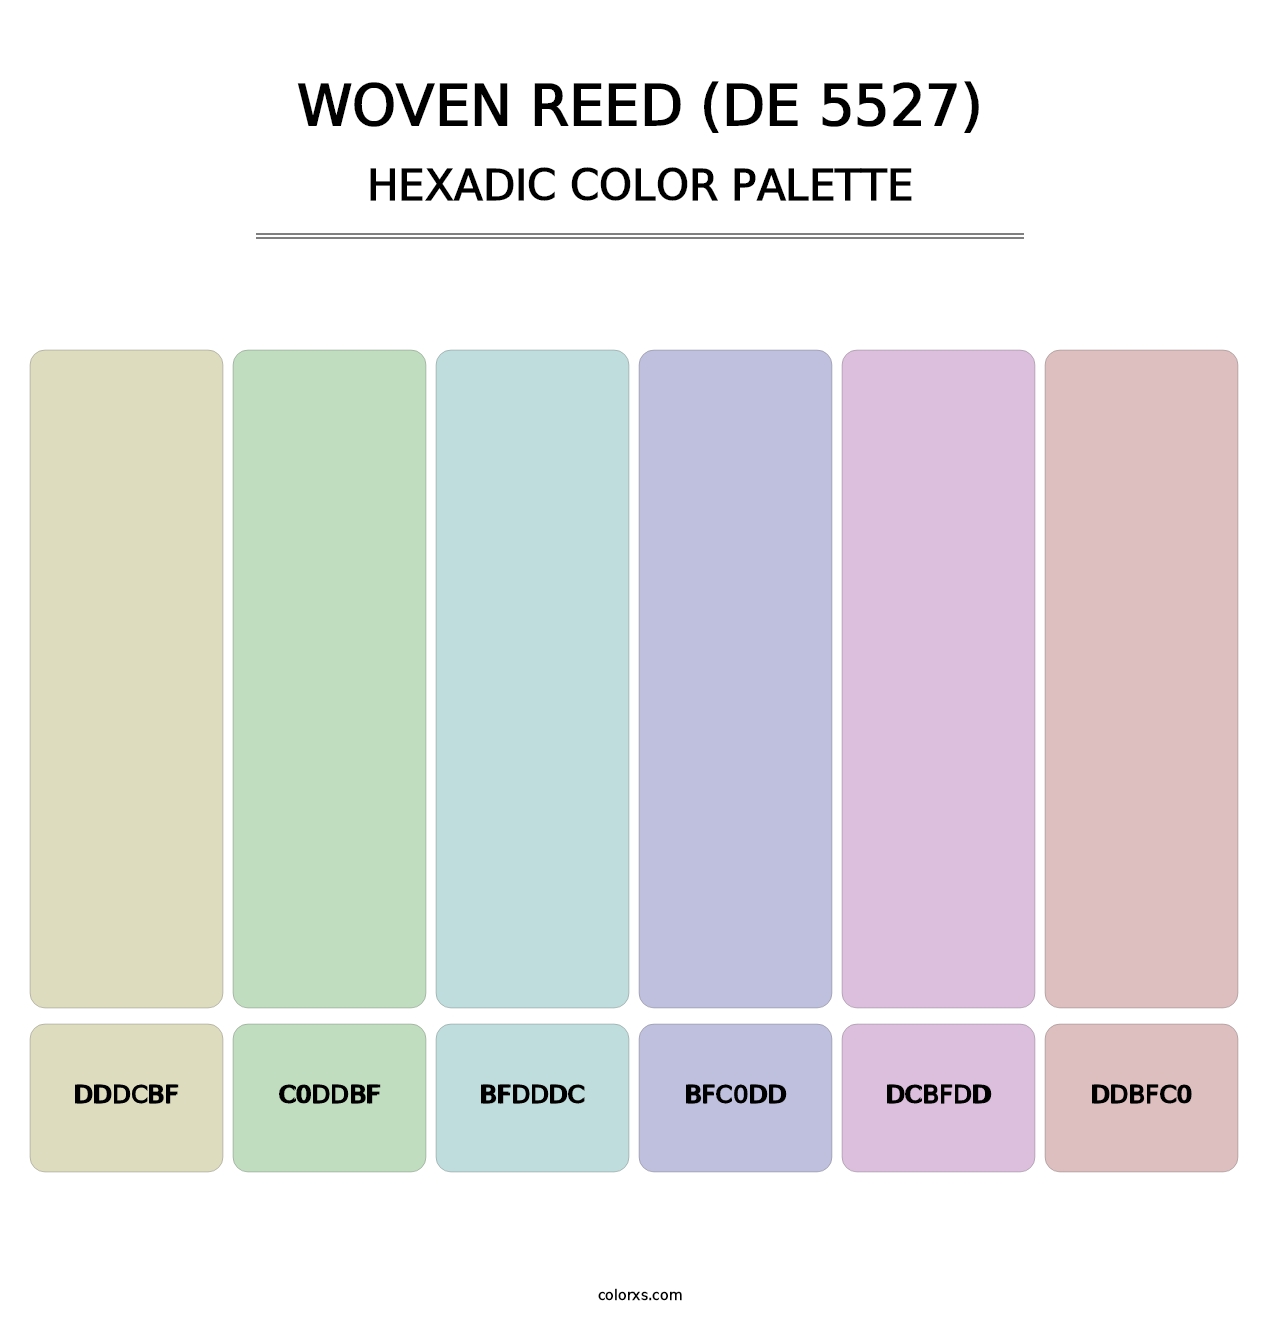 Woven Reed (DE 5527) - Hexadic Color Palette